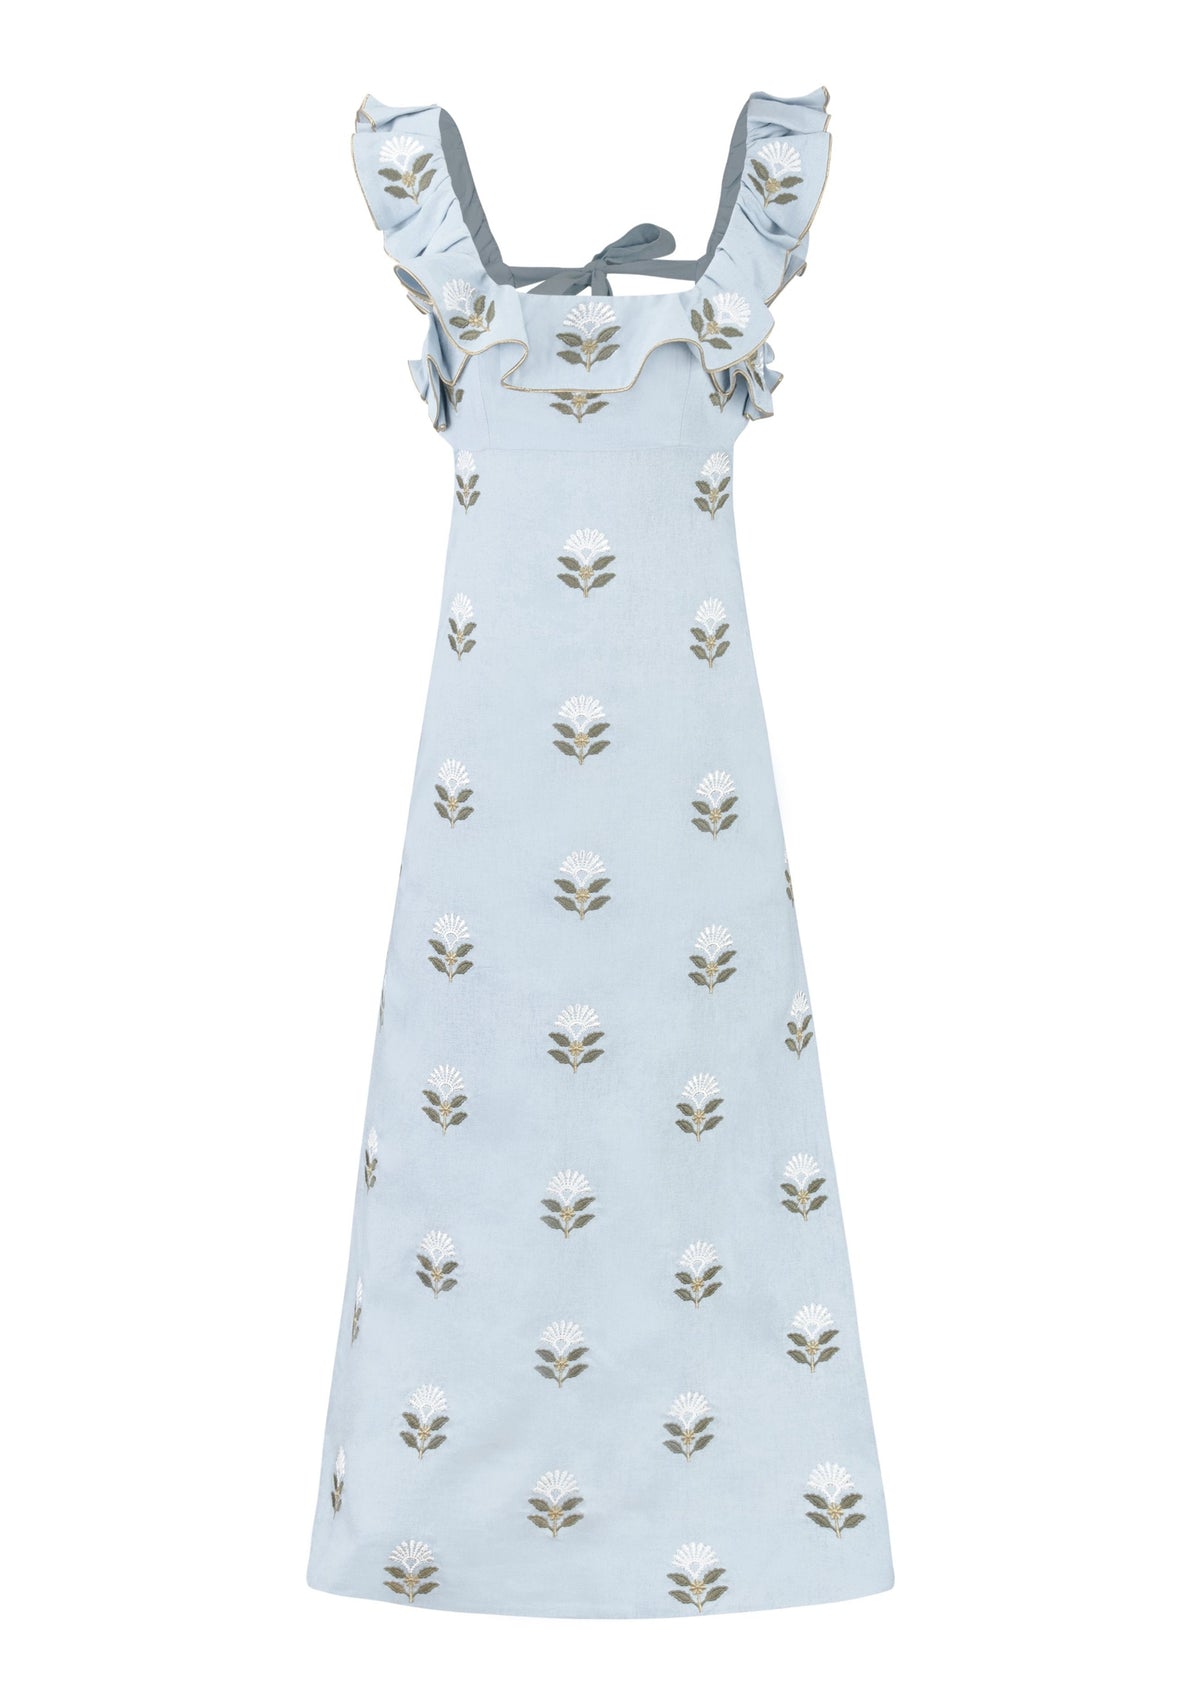 Malika Dress -White & Baby Blue Dresses - Formal Rosewater House 